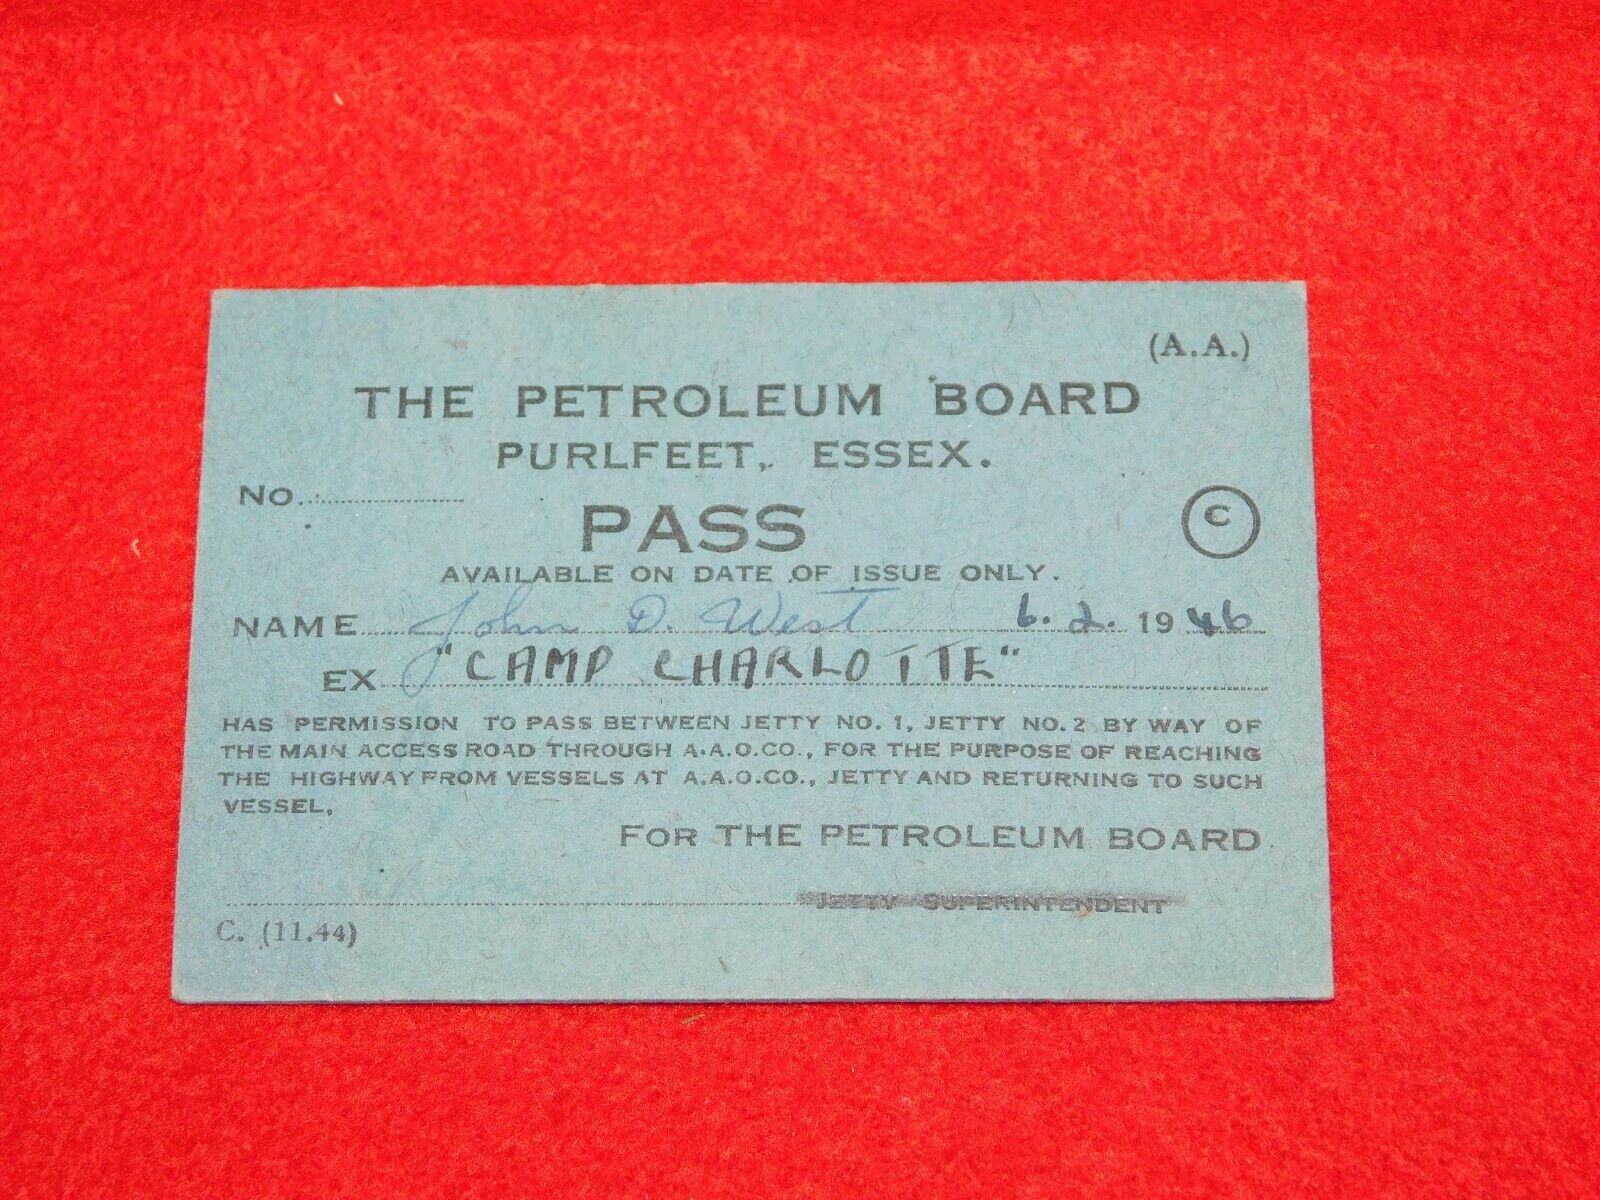 VINTAGE BUSINESS CARD 1946 PETROLEUM BOARD PURLFEET ESSEX PASS